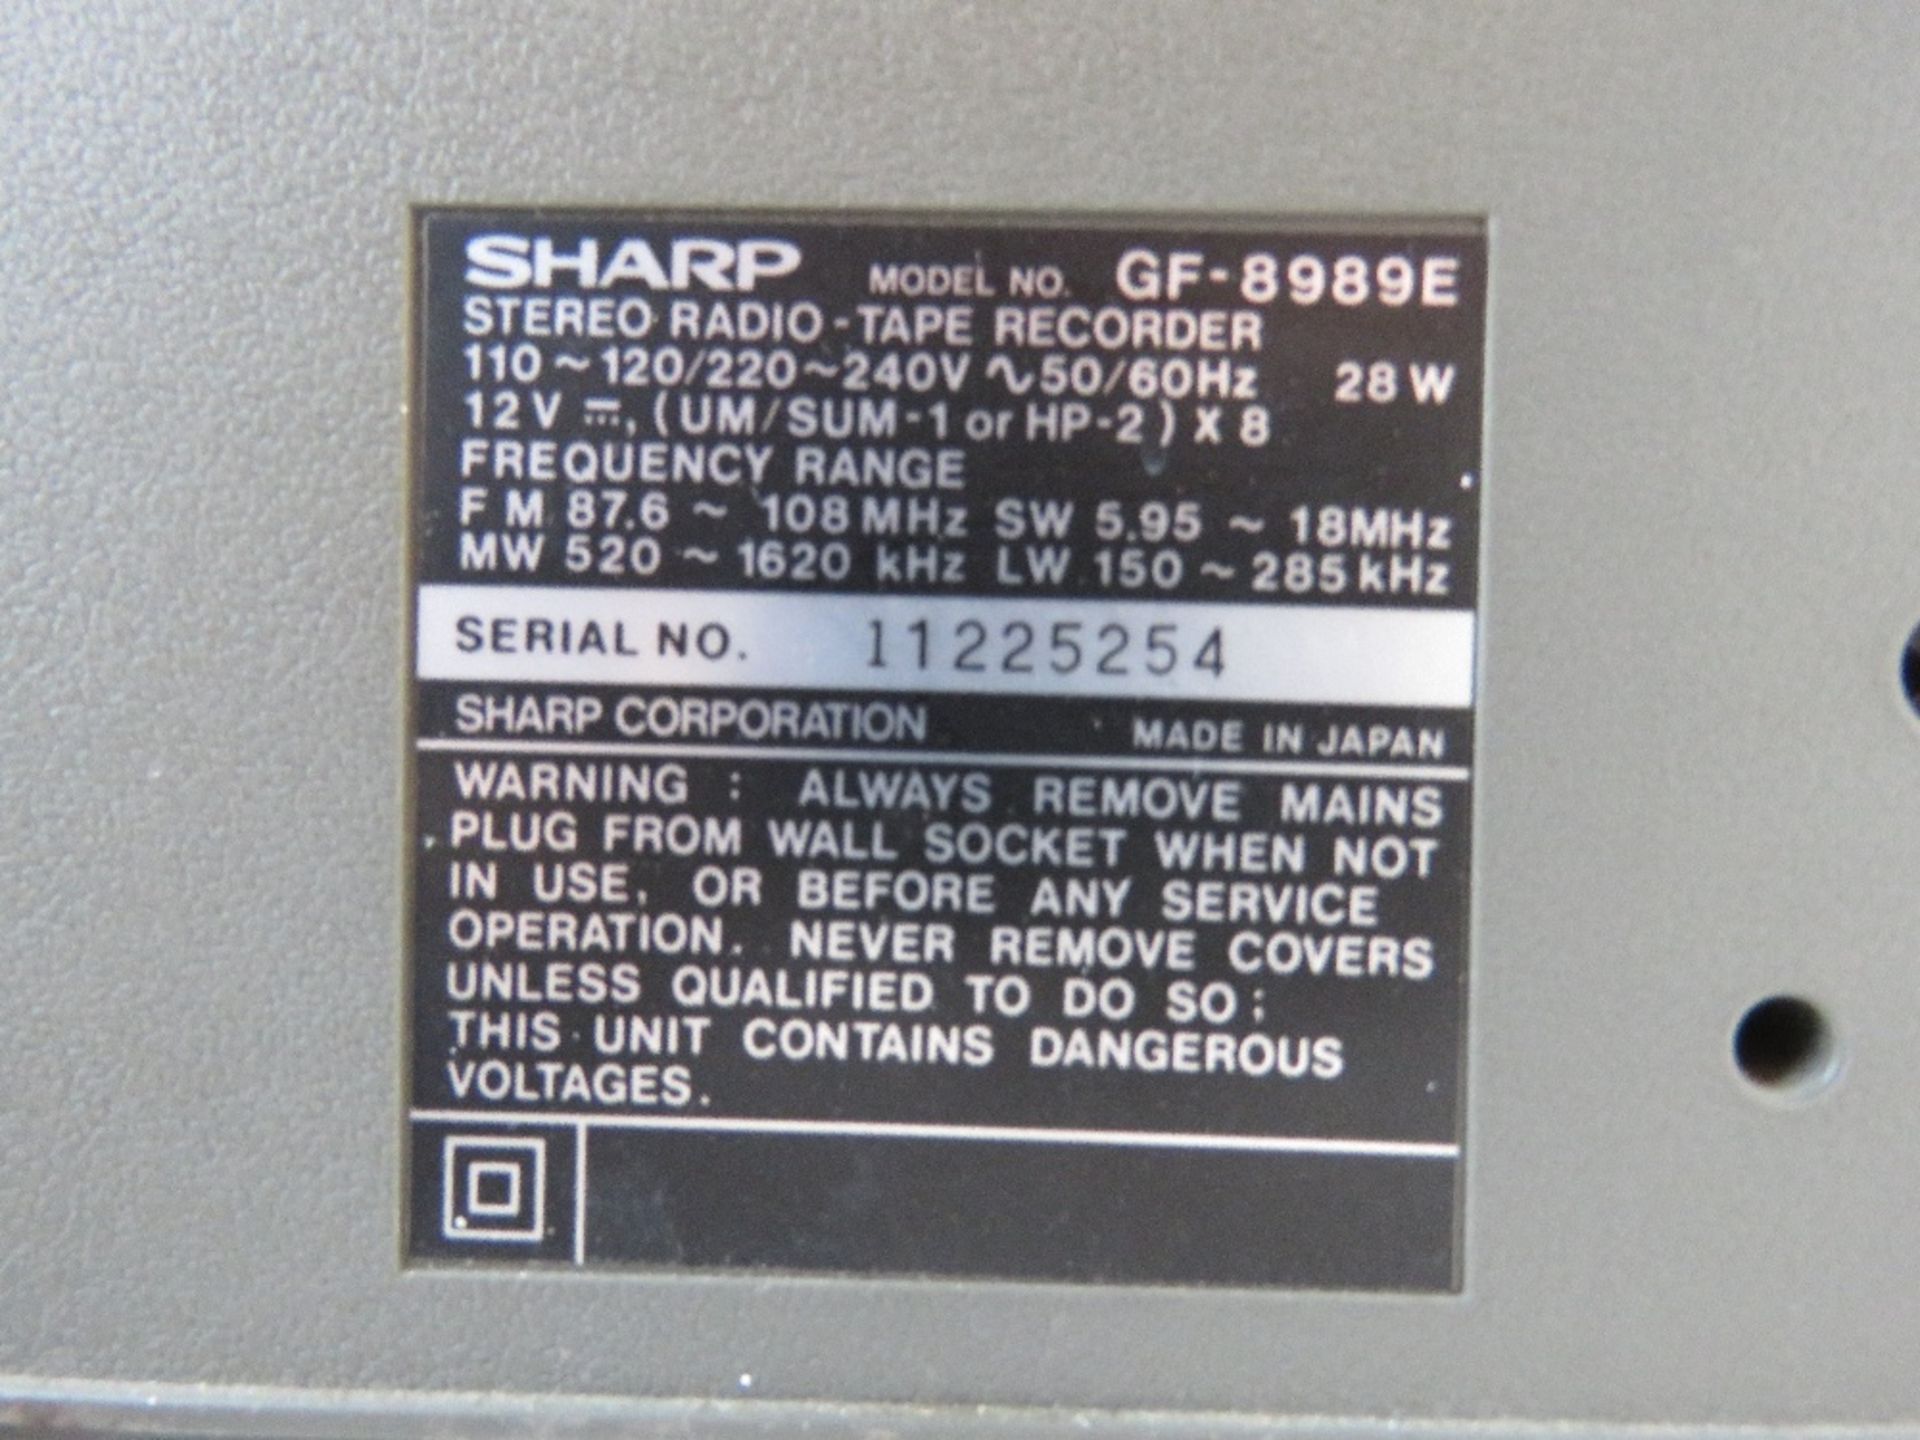 A Sharp stereo radio tape recorder model GF-8989E. - Image 2 of 2